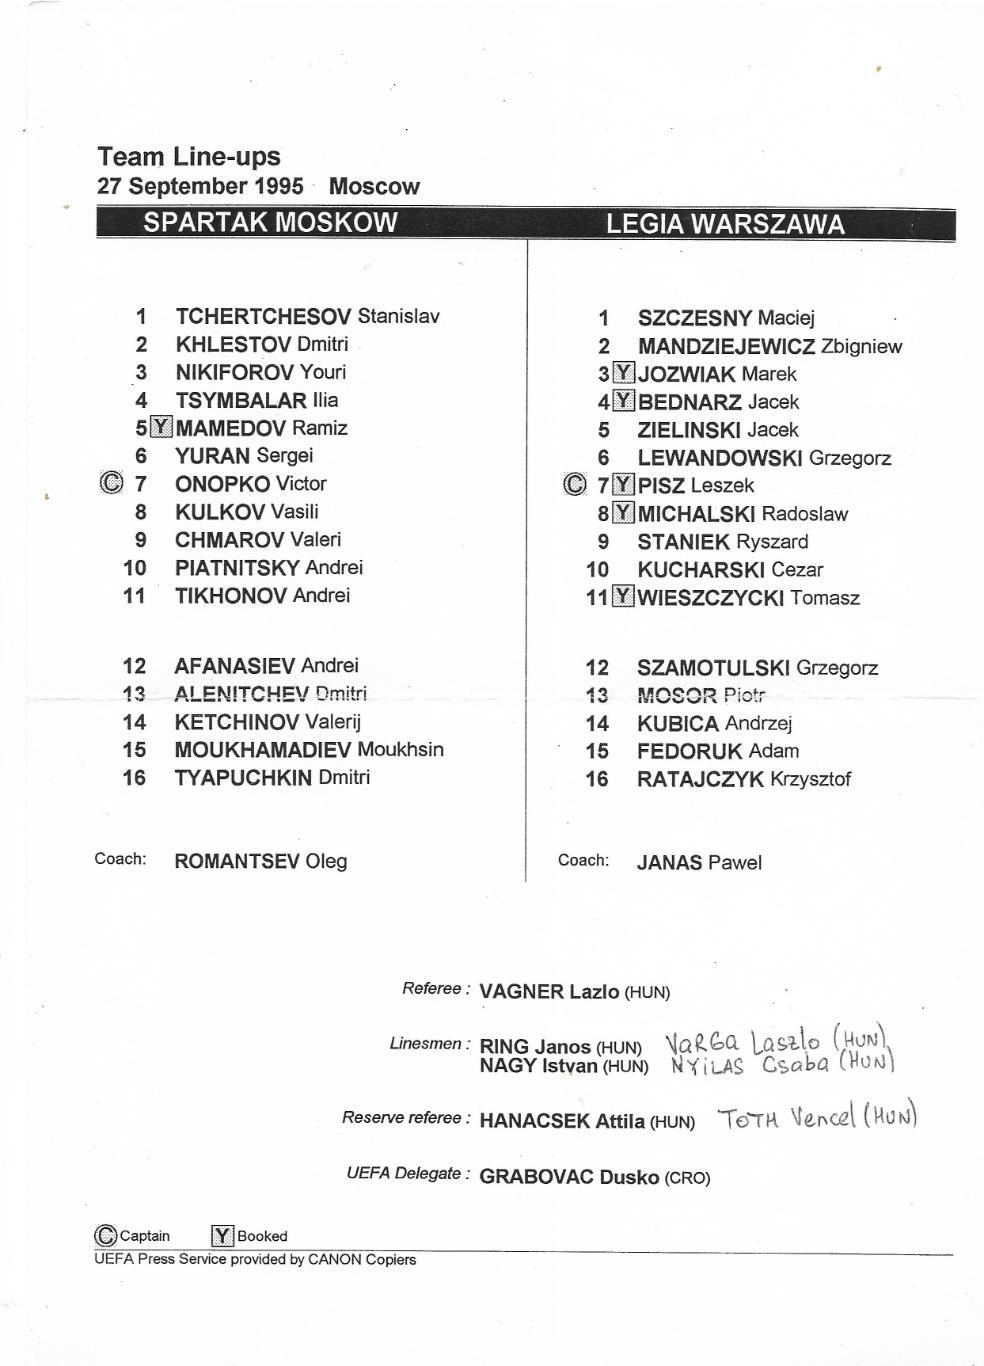 Spartak Moskow v Legia Warszawa _27.09. 1995_team_Line-ups_(на польском языке)